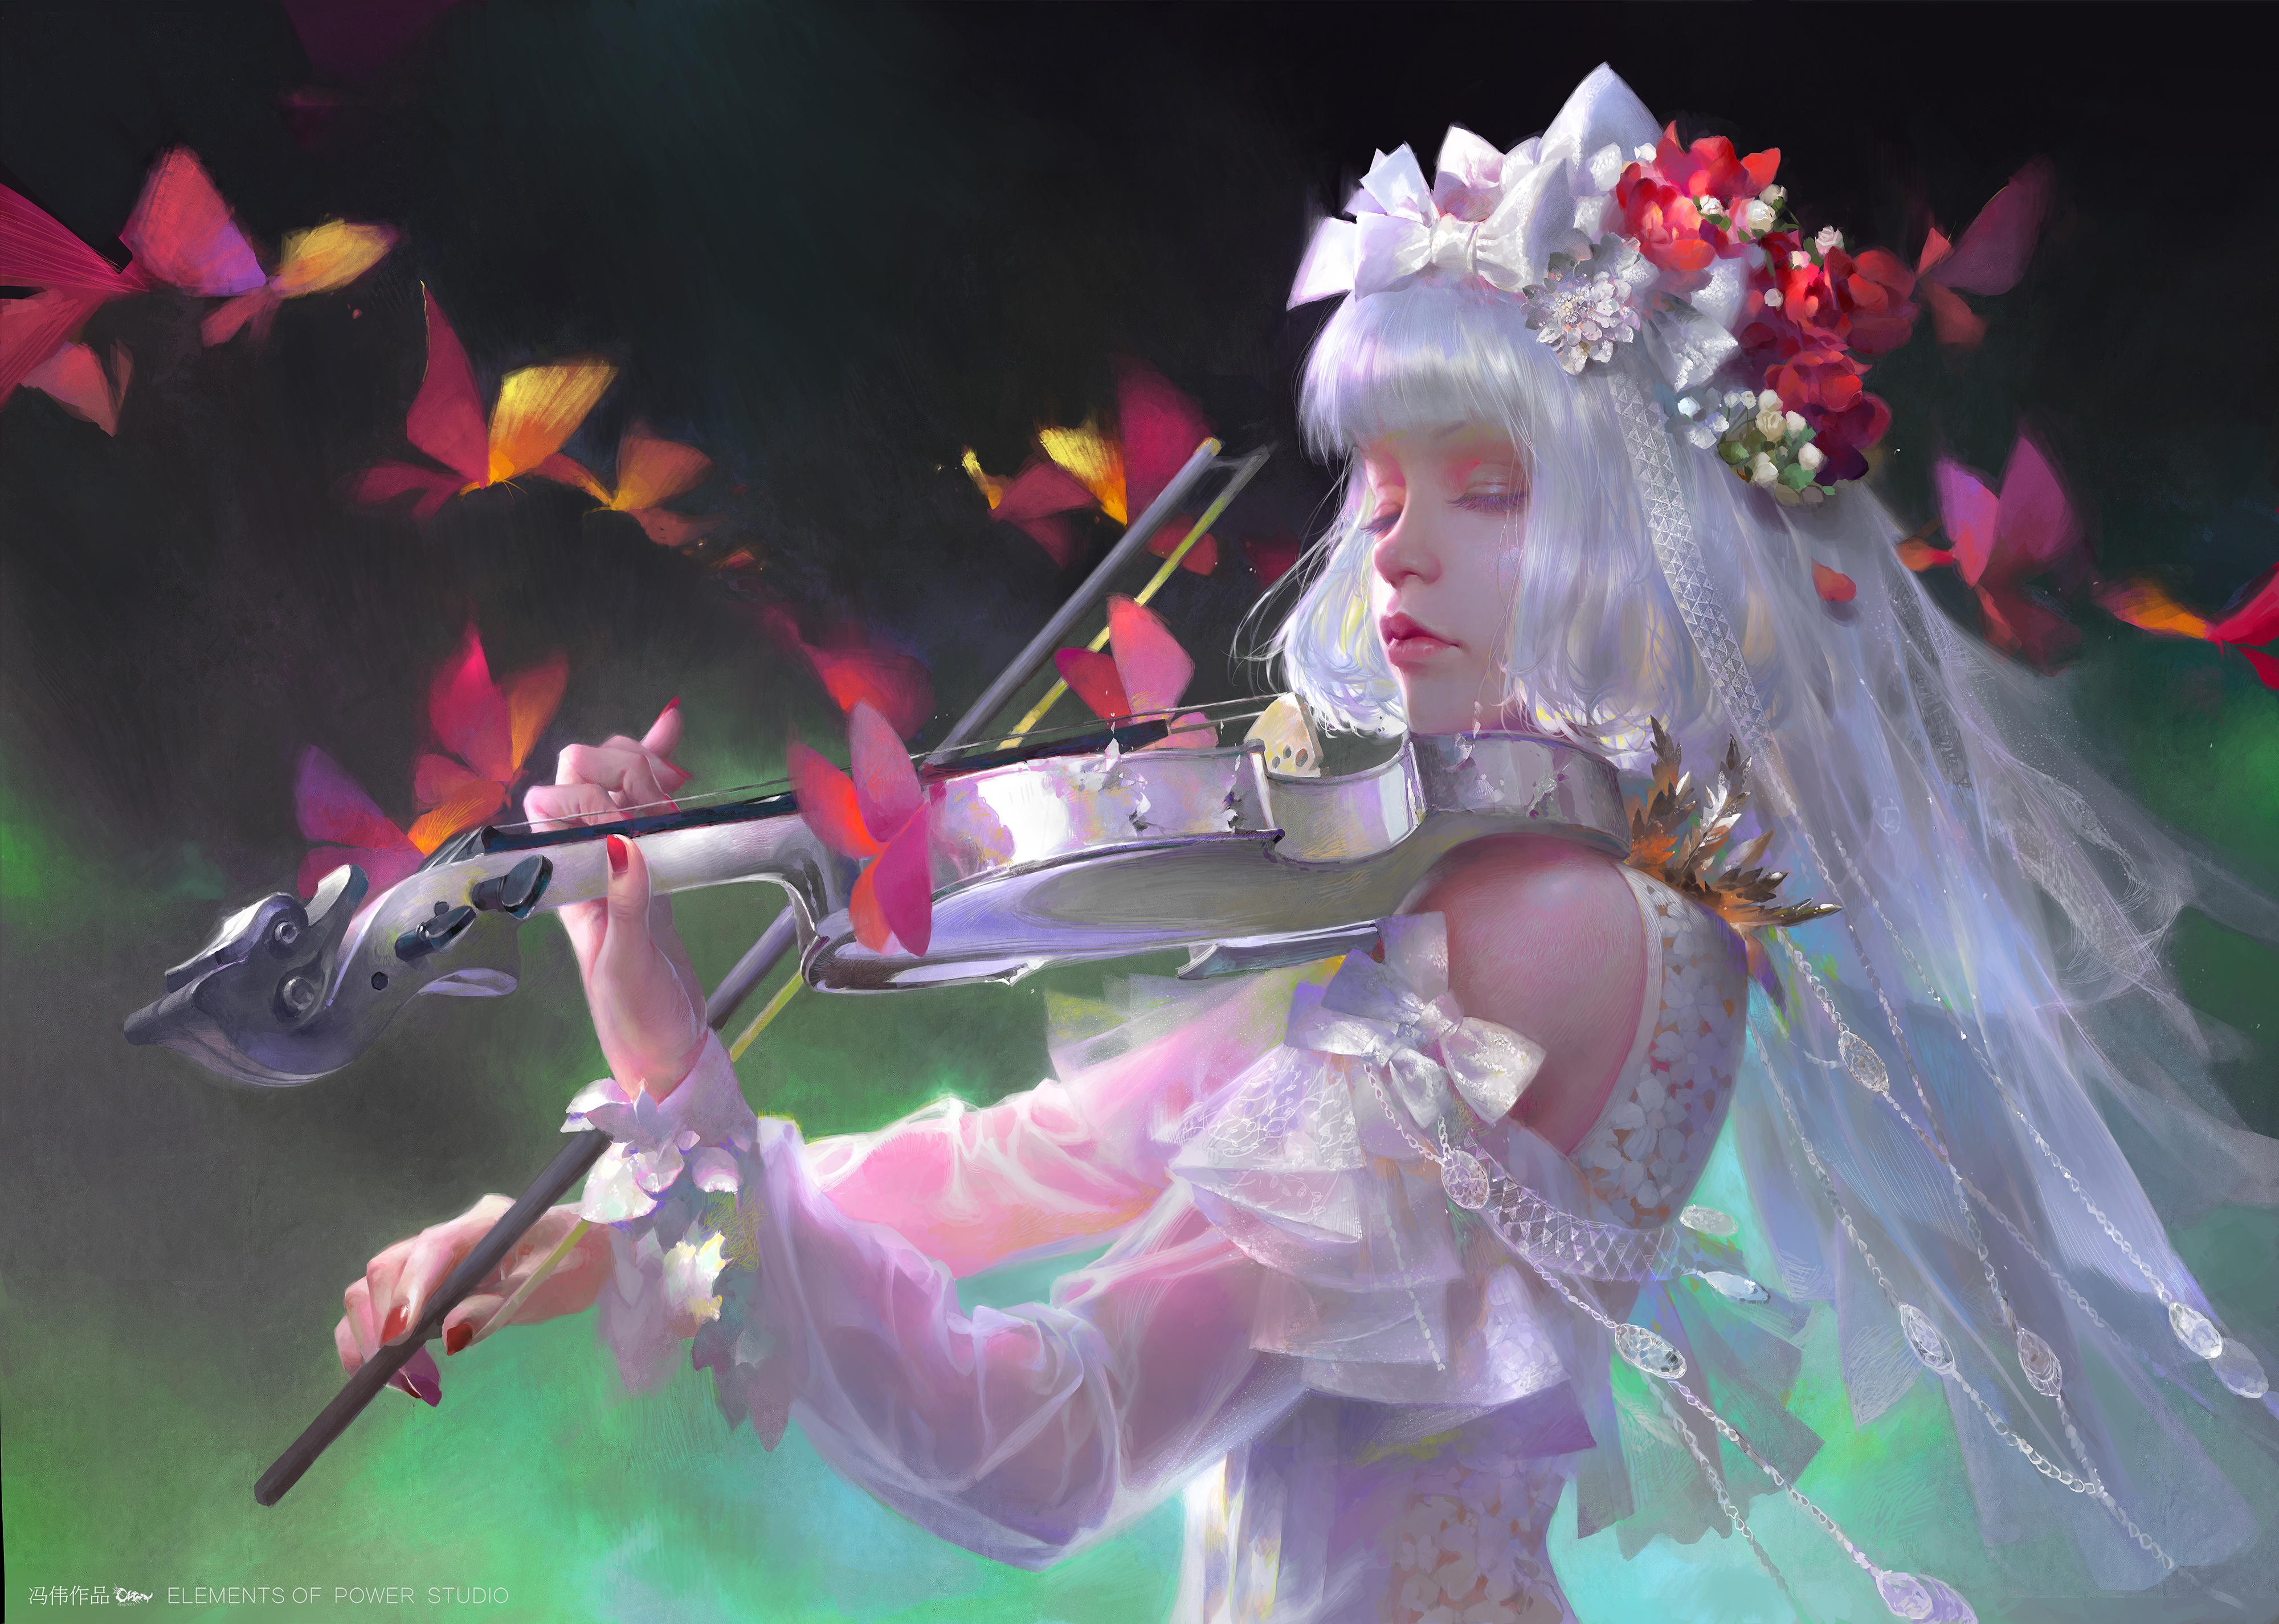 General 4000x2851 closed eyes white hair violin musical instrument dress flowers Feng Wei digital art